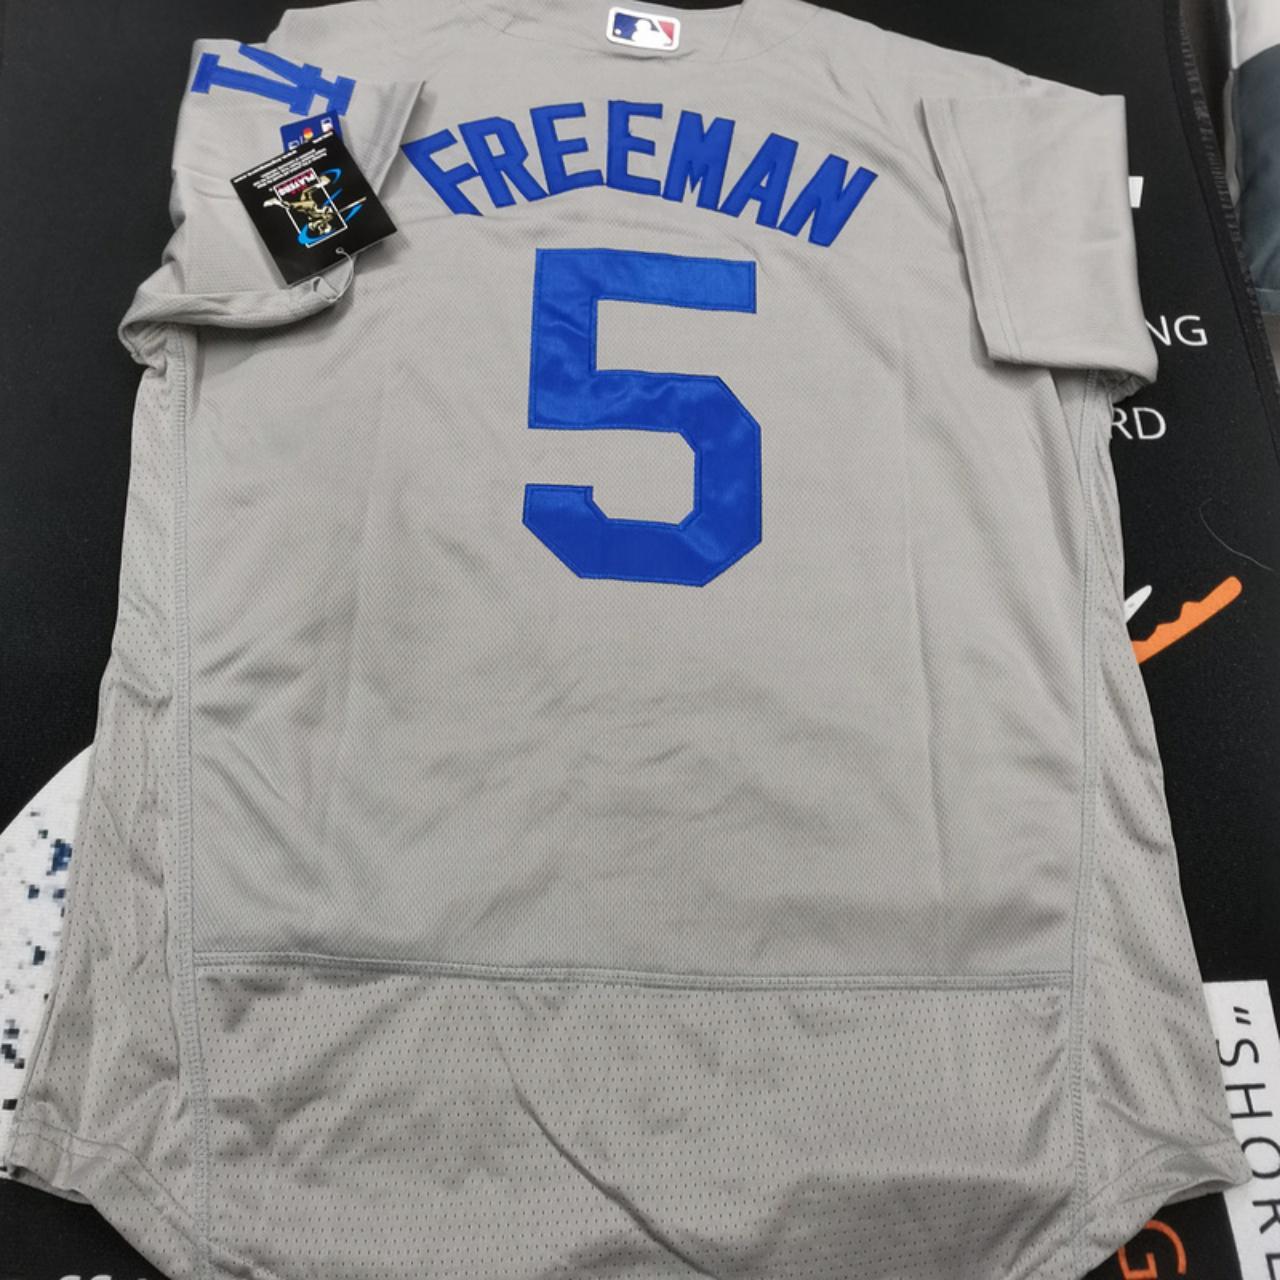 Nike Women's Los Angeles Dodgers Freddie Freeman #5 White Cool Base Home  Jersey